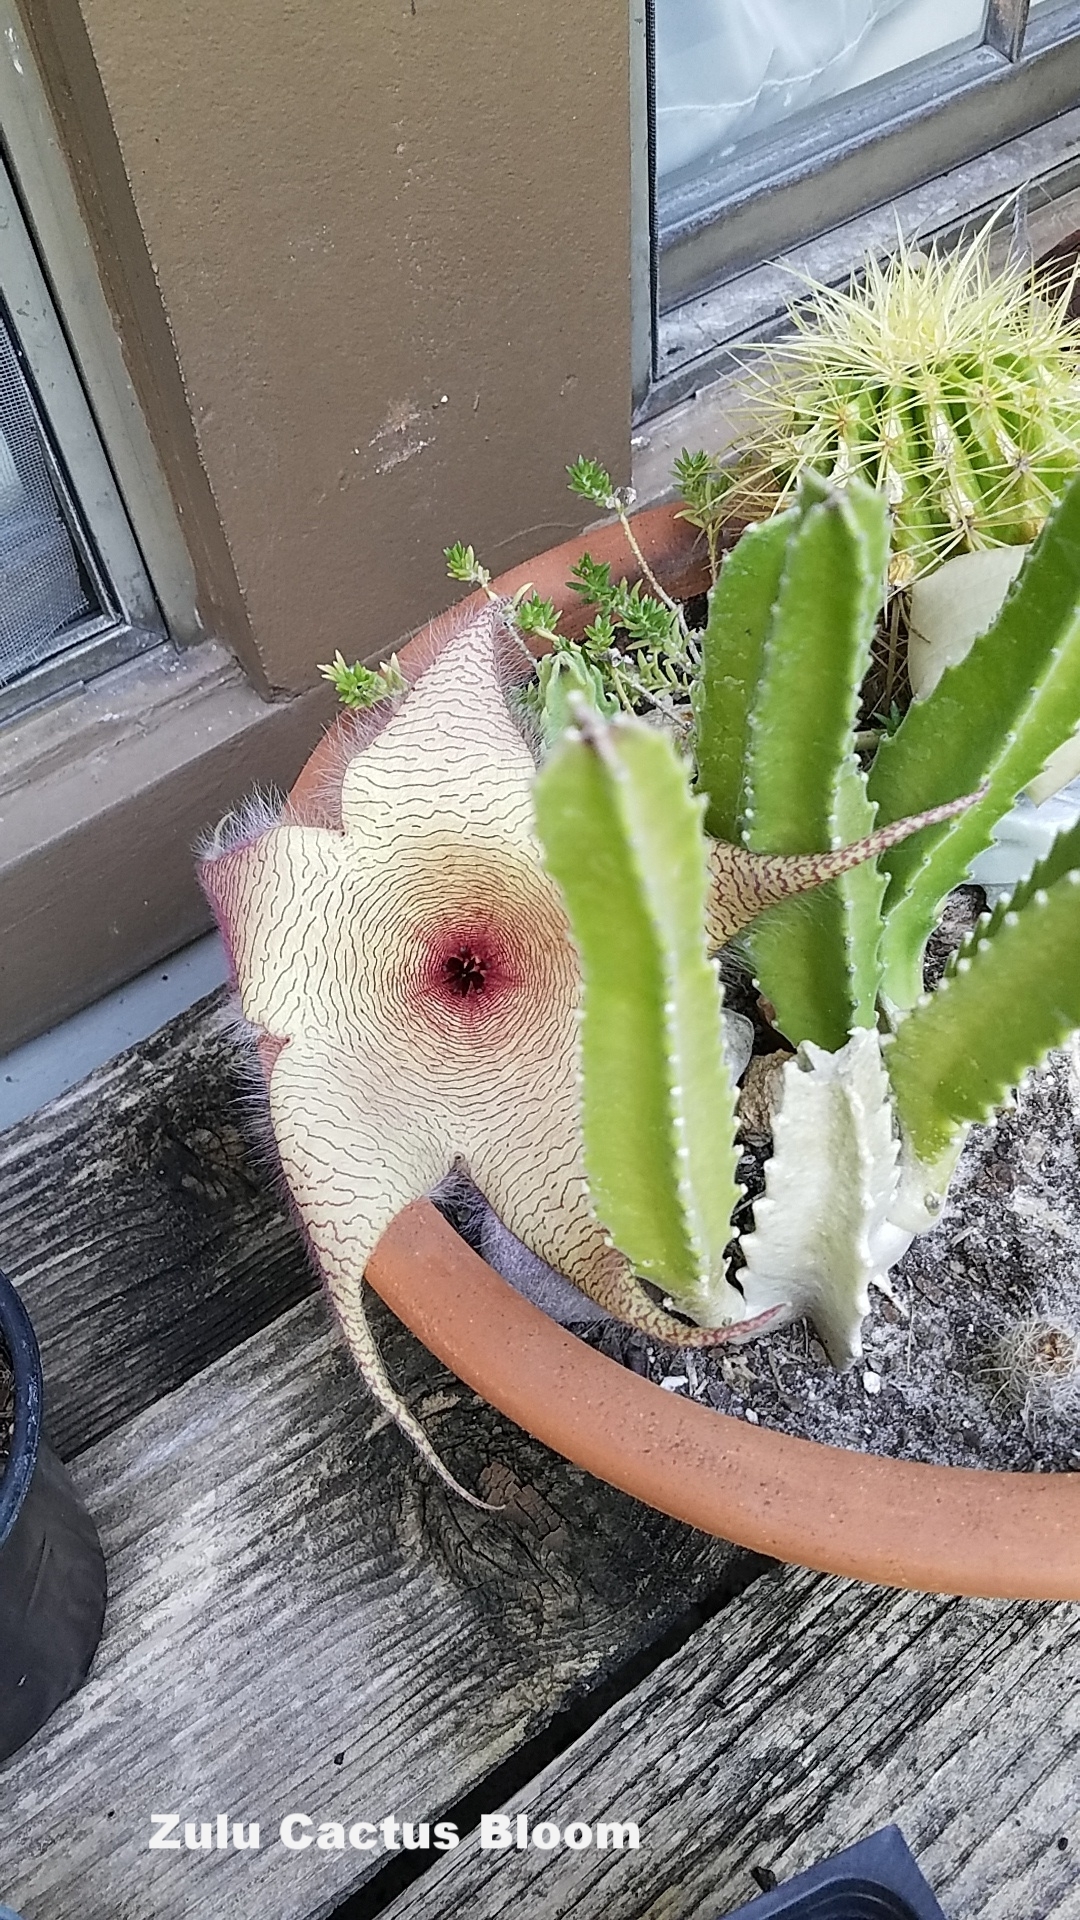 Zulu Cactus Bloom.jpeg